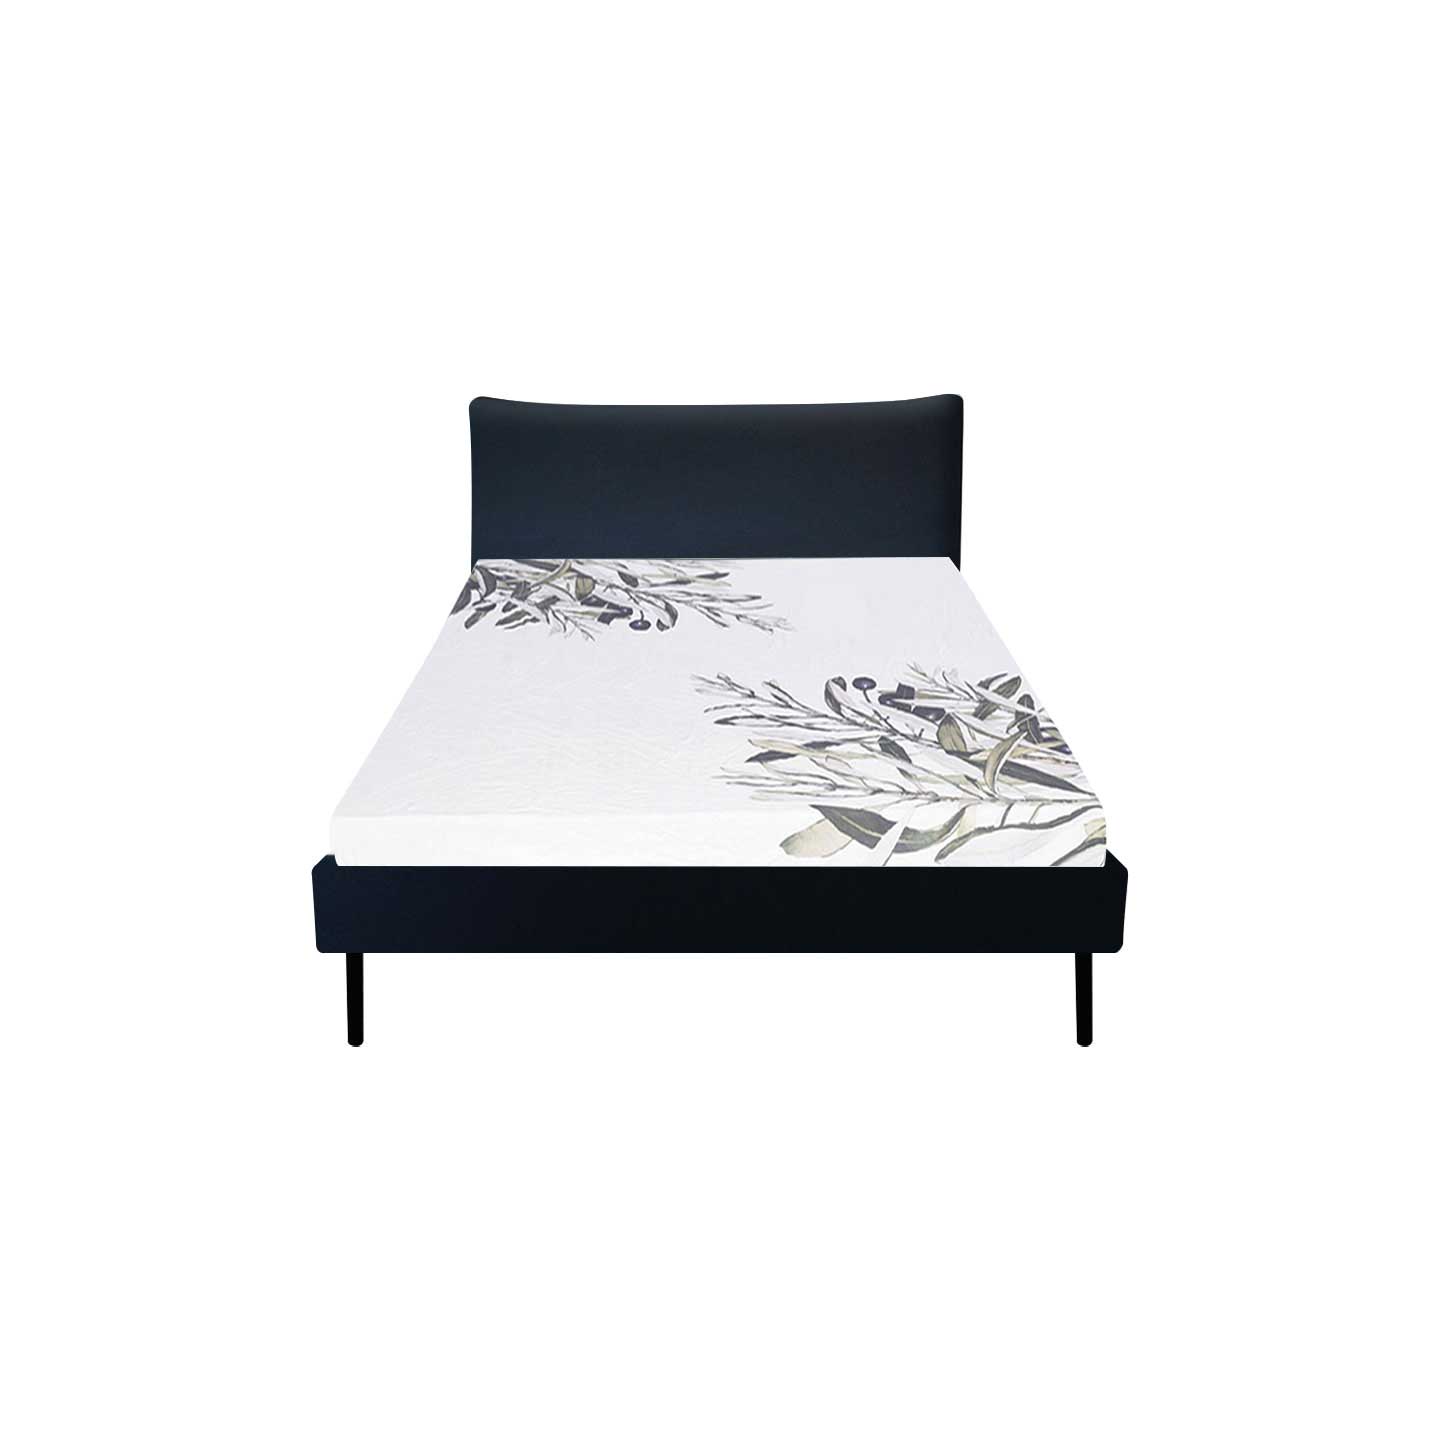 Dessau Textured Black Single Bed